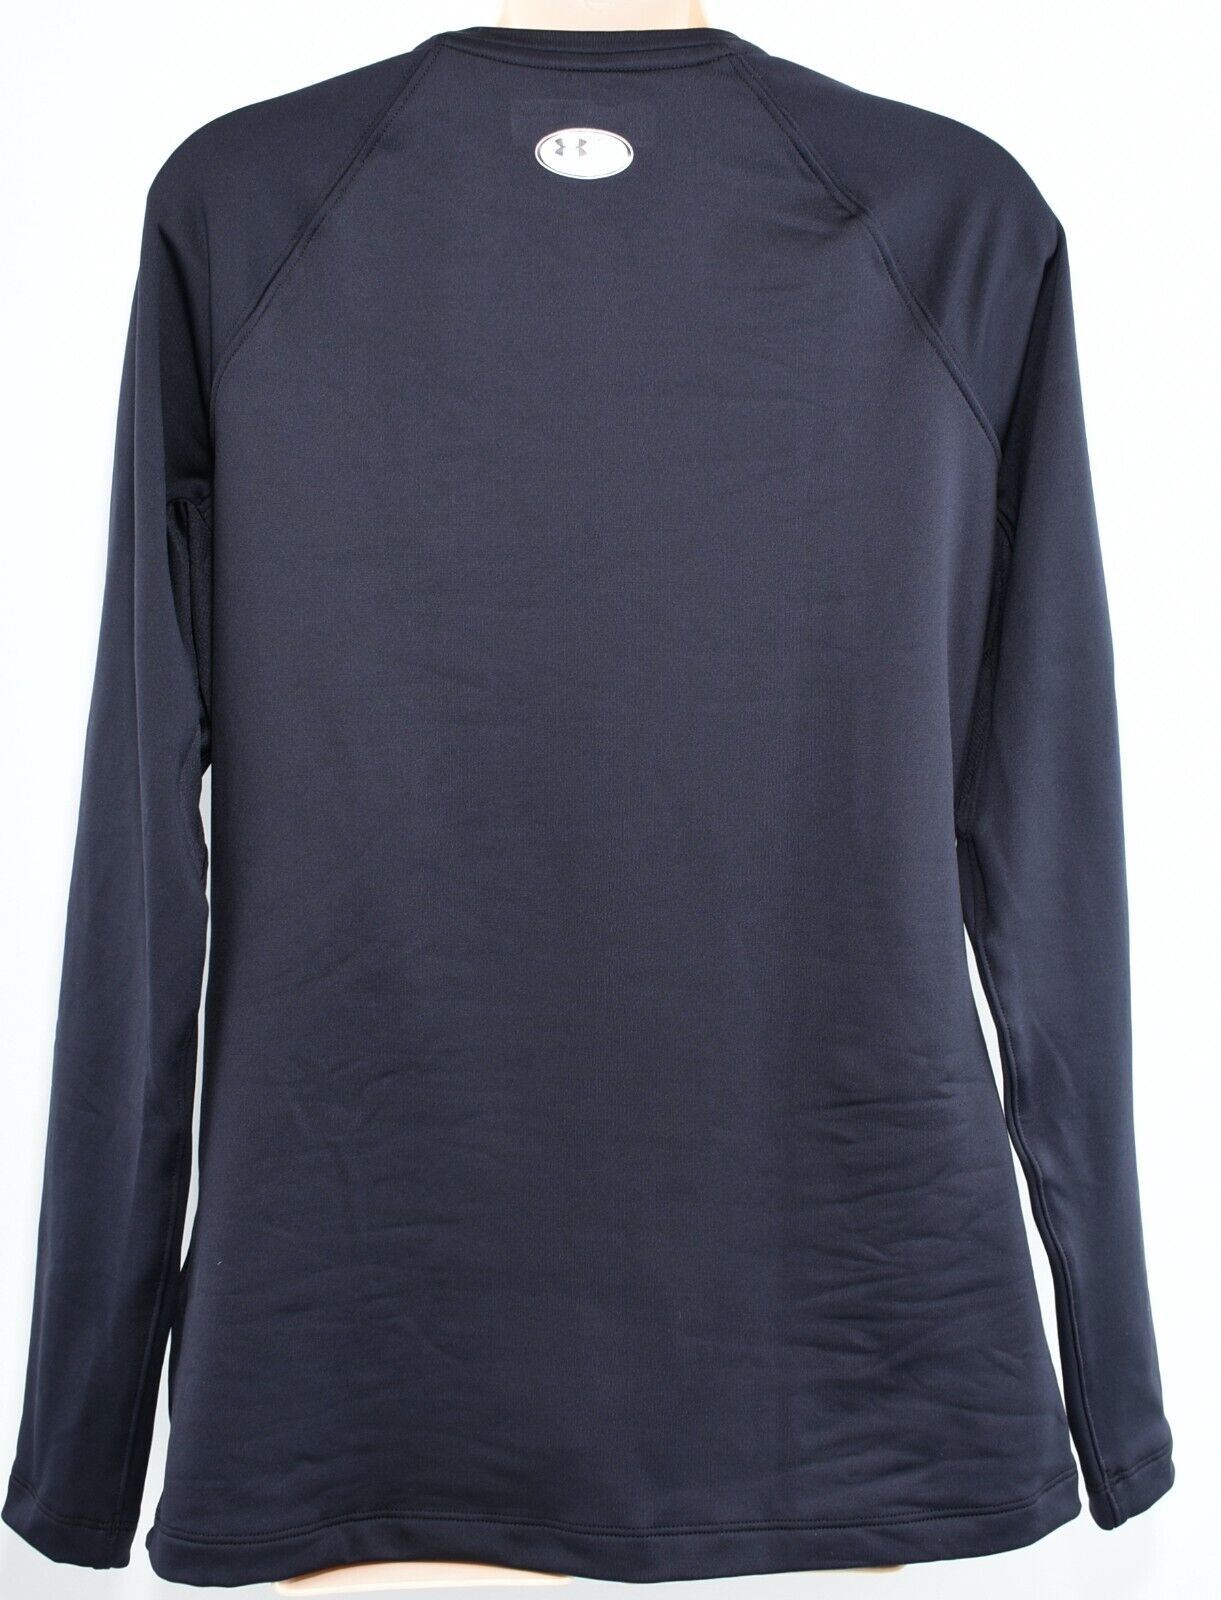 UNDER ARMOUR Women's ColdGear Long Sleeve BASELAYER TOP, Black size XL /UK 16